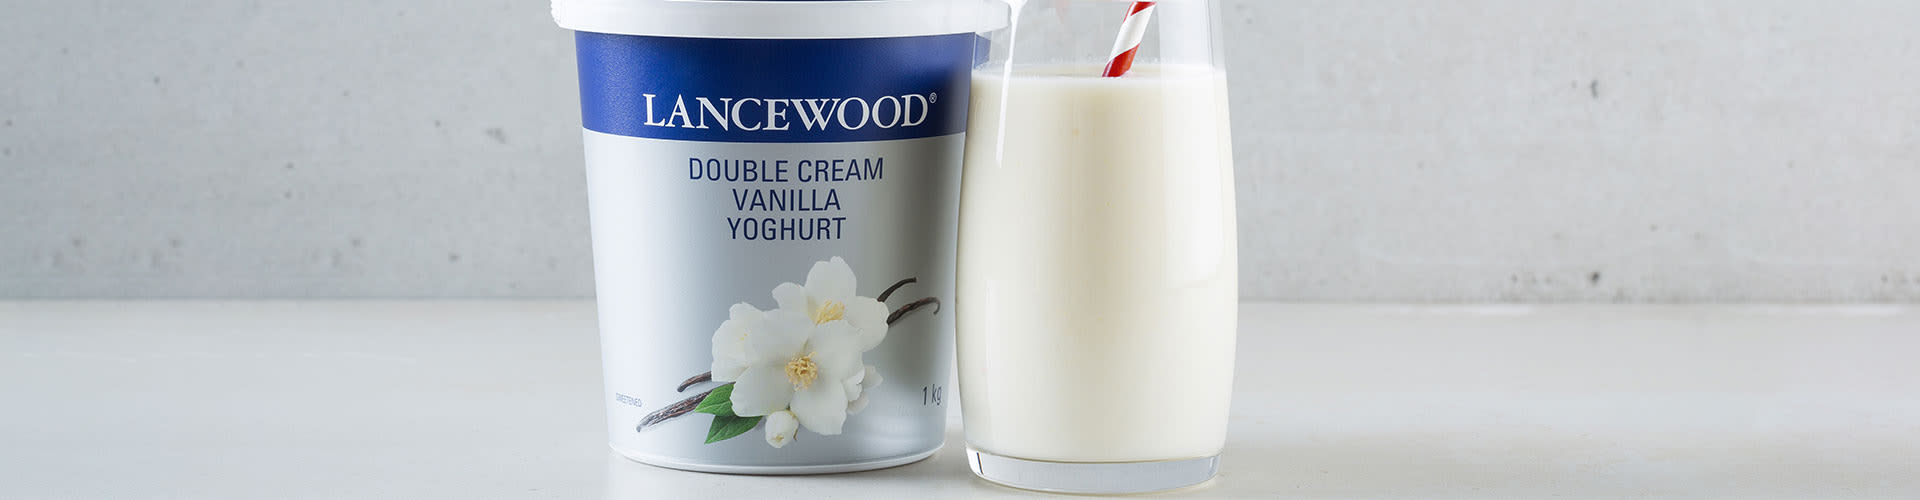 Lancewood double cream vanilla yoghurt product banner